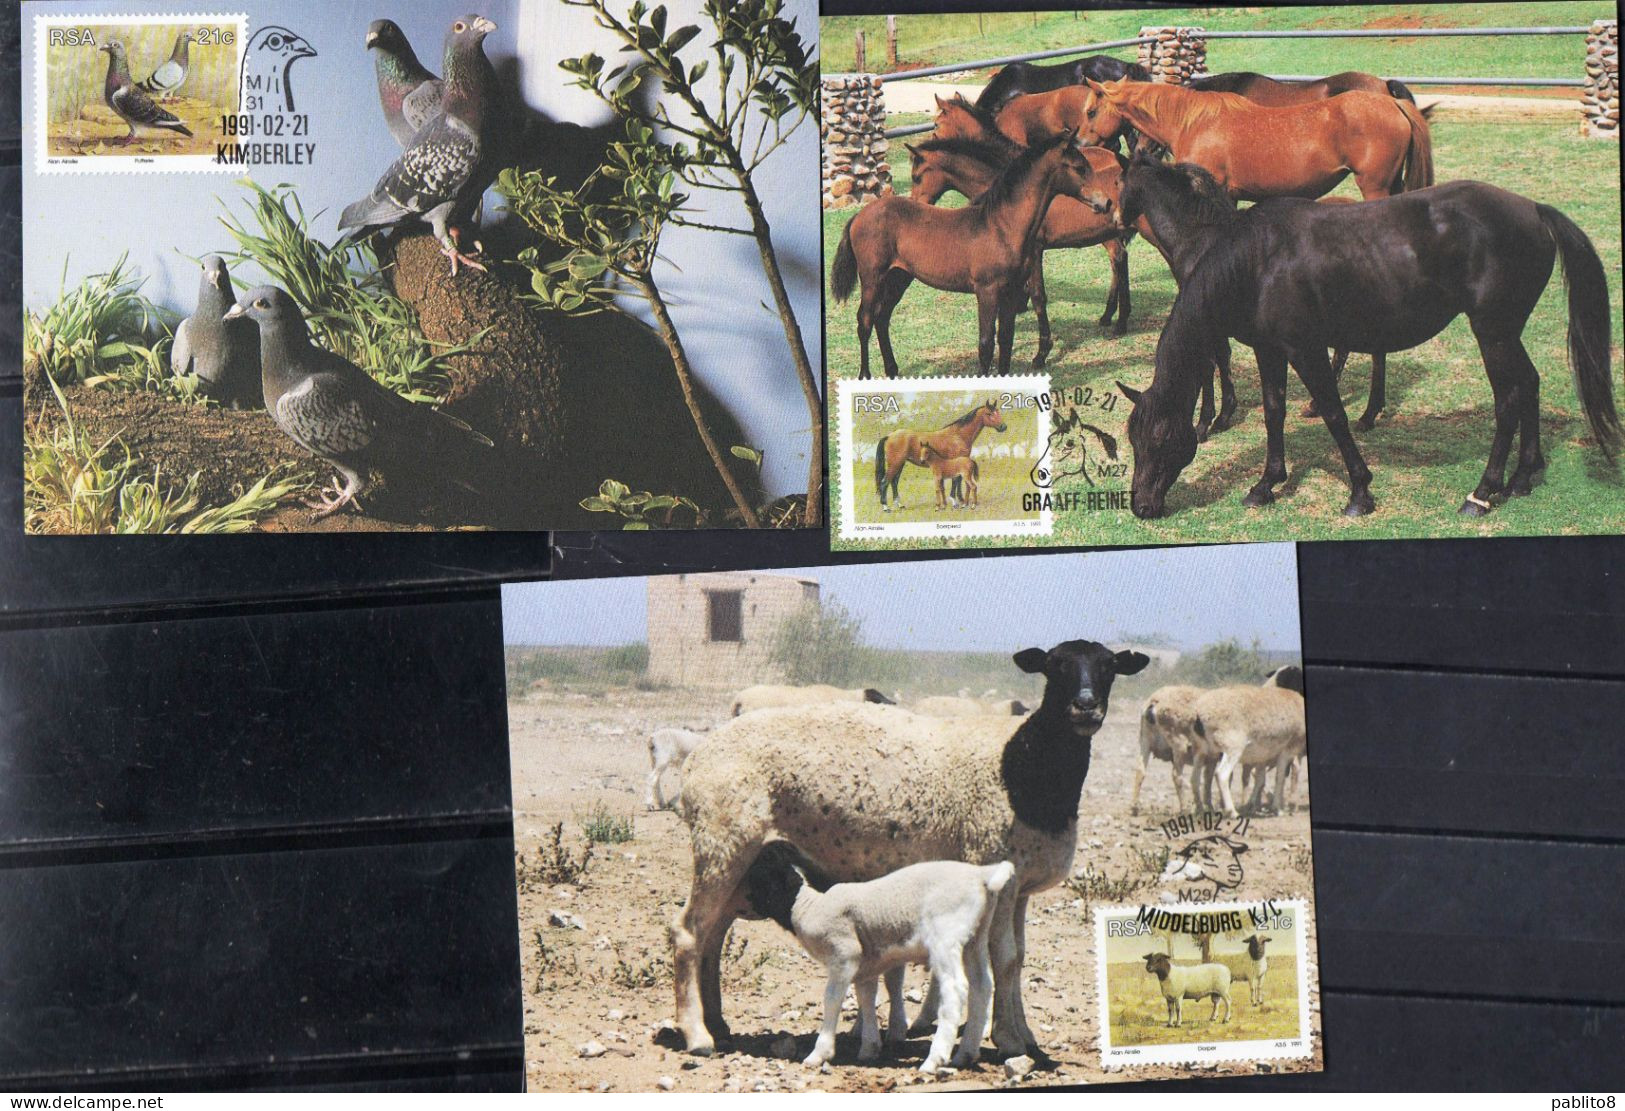 SUD SOUTH AFRICA AFRIQUE RSA 1990 FAUNA ANIMAL BREEDING ANIMALS COMPLETE SET MAXI MAXIMUM CARD - FDC